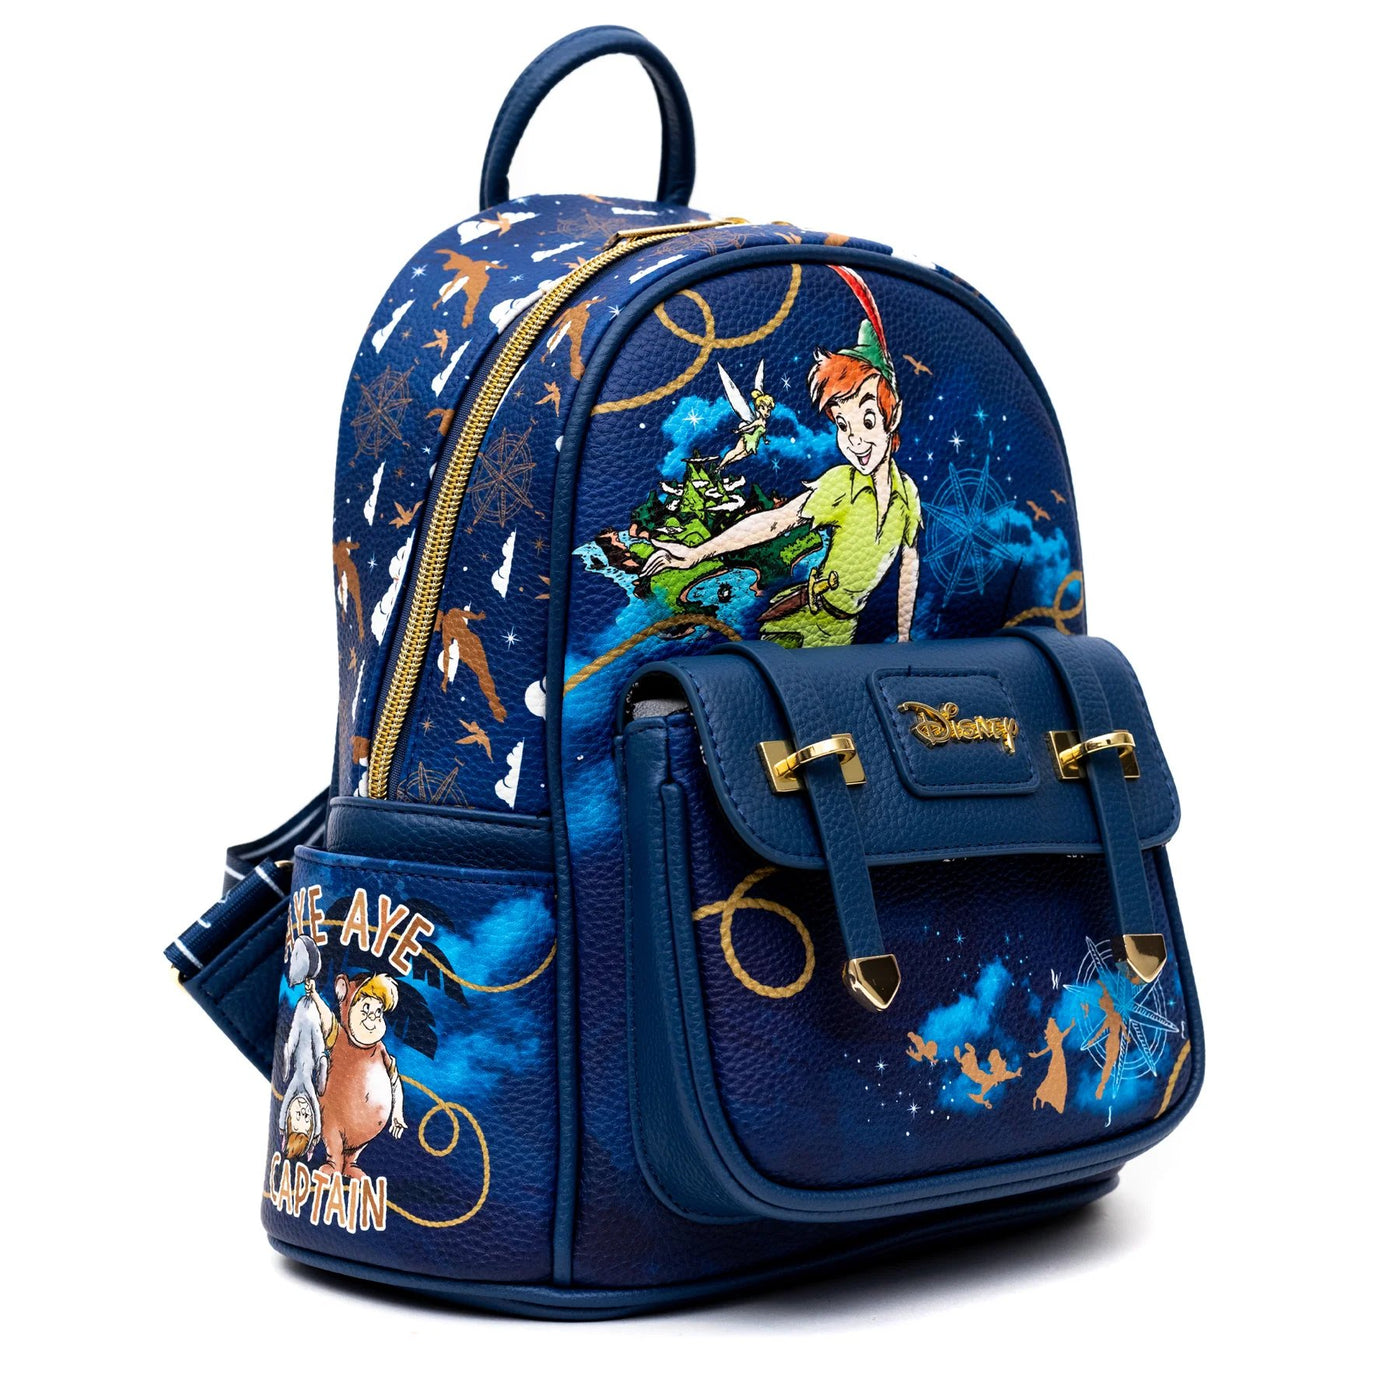 WondaPop Disney Peter Pan Mini Backpack - Side View